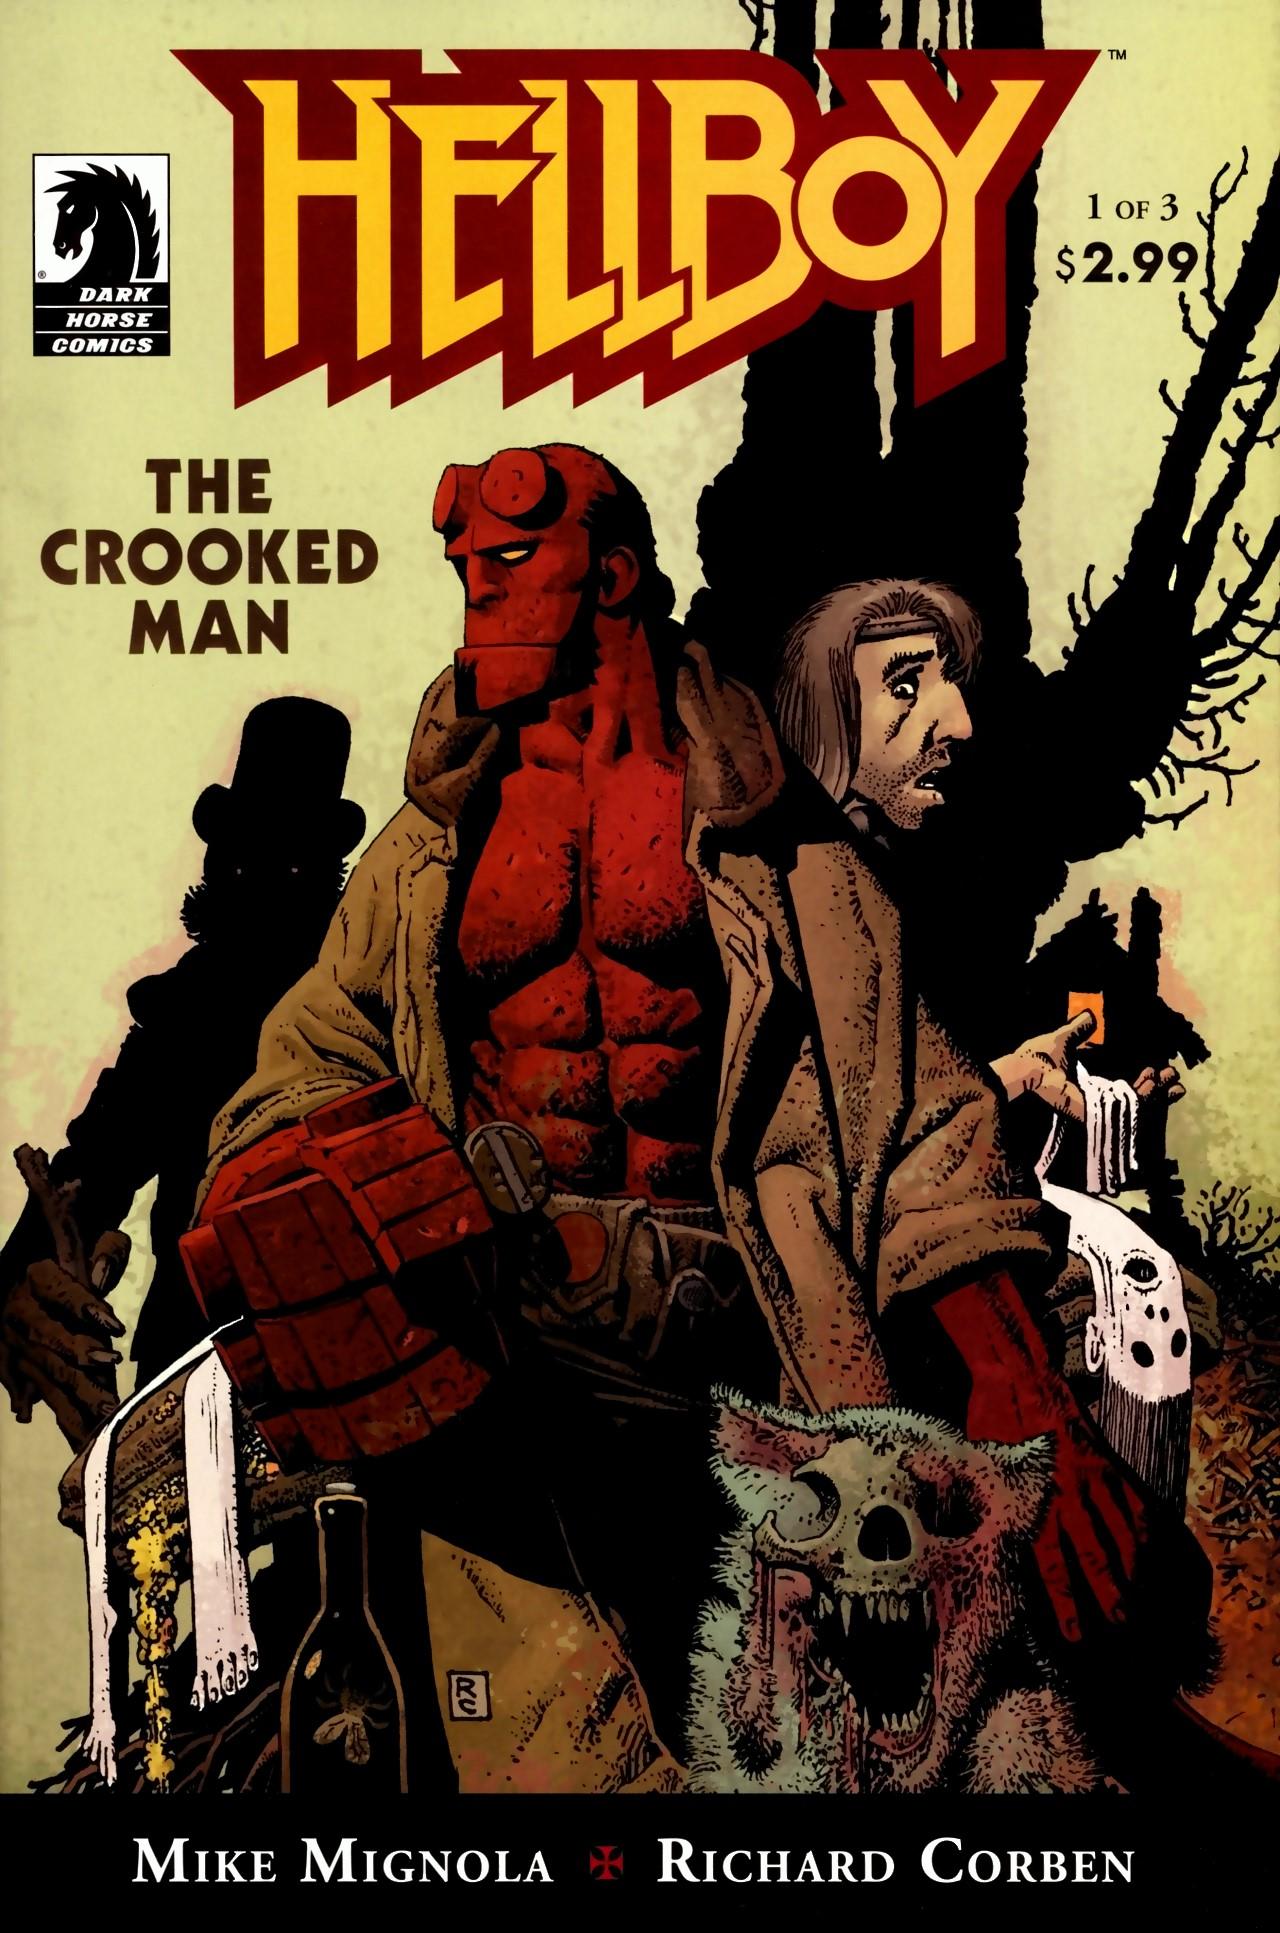 Hellboy: The Crooked Man Vol. 1 #1